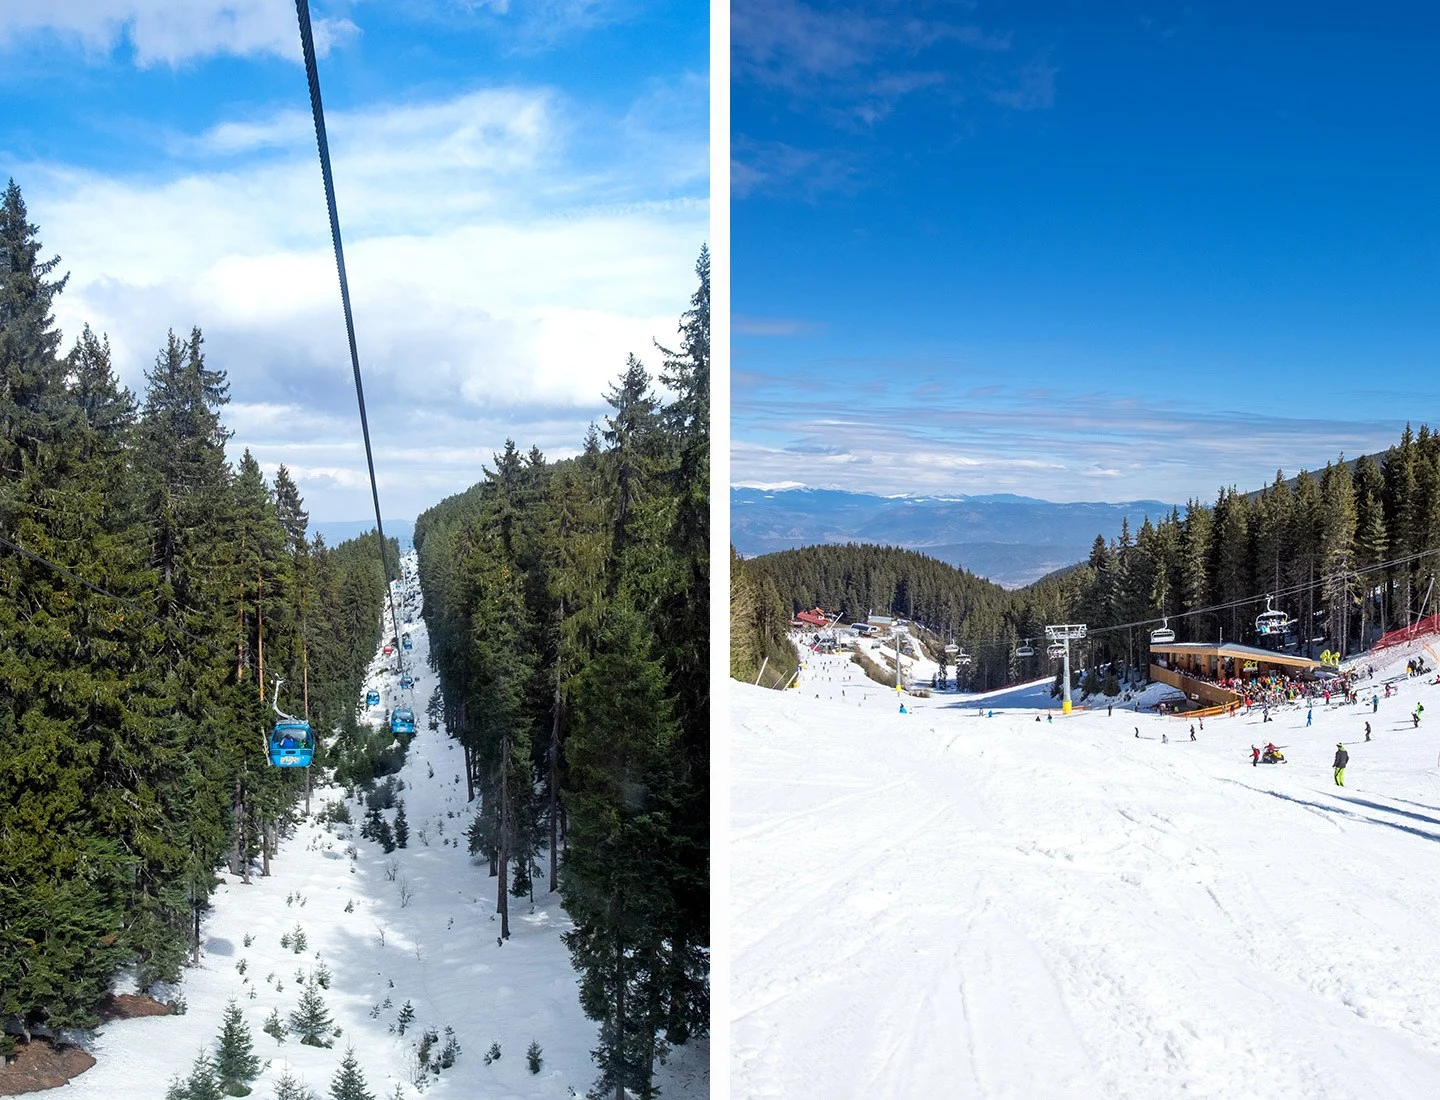 Lifts and pistes in Bansko ski resort, Bulgaria